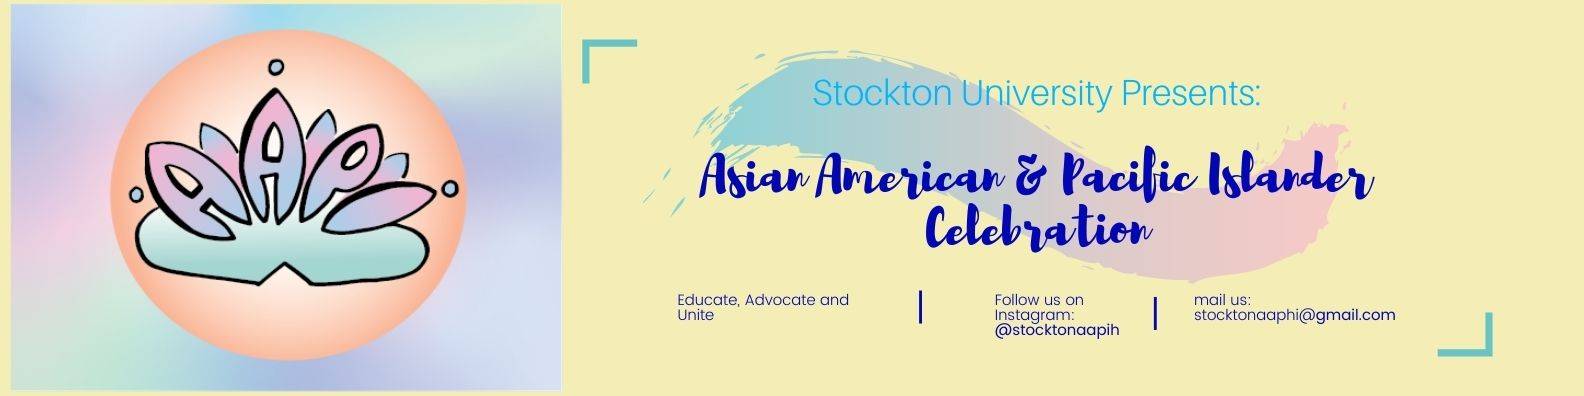 Asian American & Pacific Islander Heritage Celebration Banner